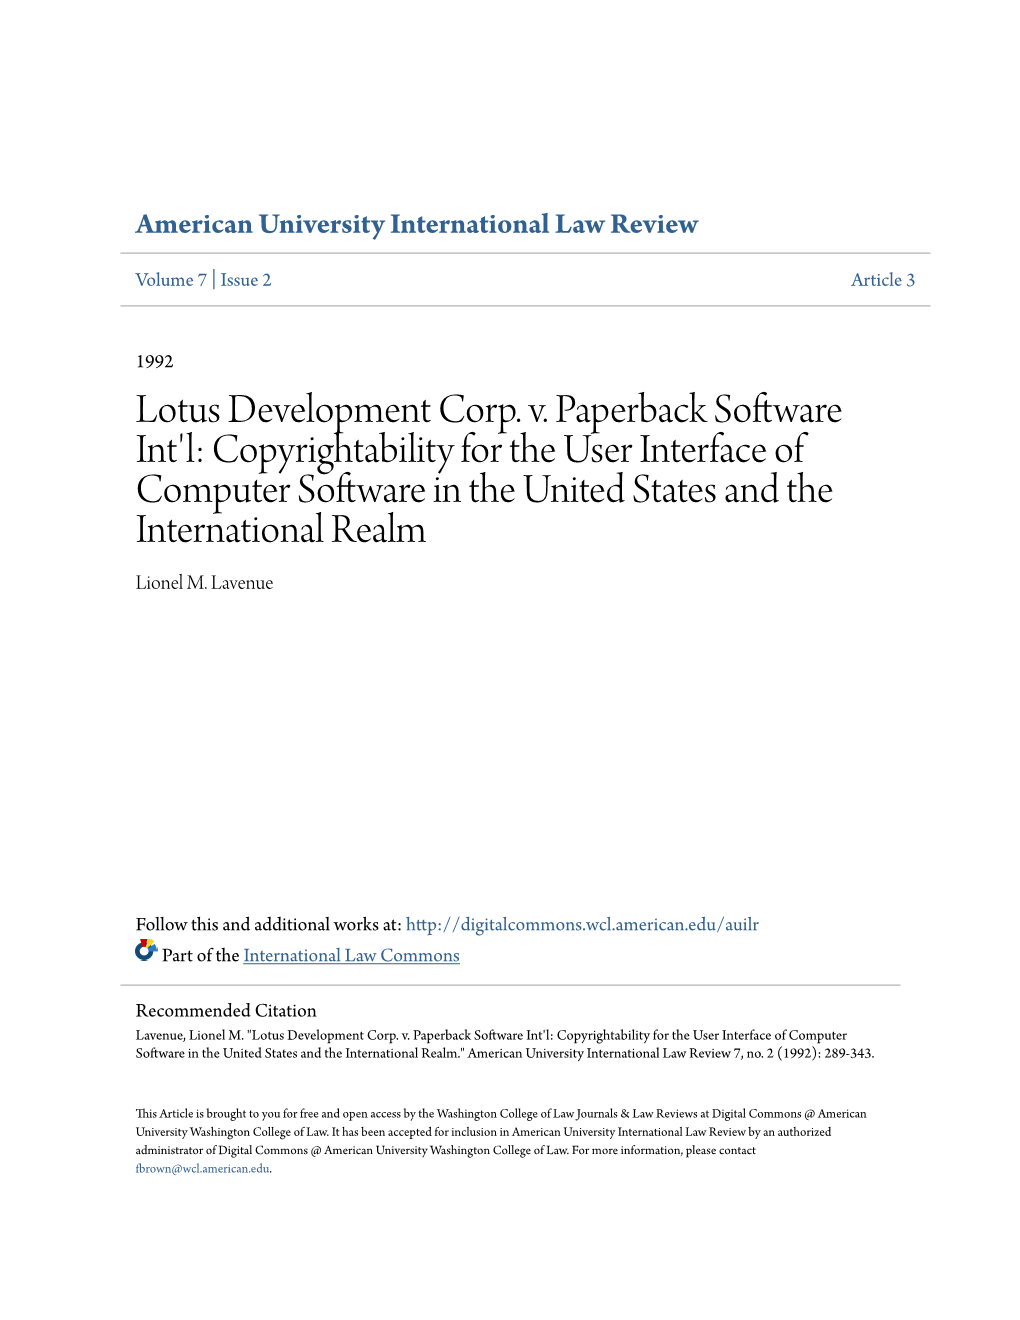 Lotus Development Corp. V. Paperback Software Int'l